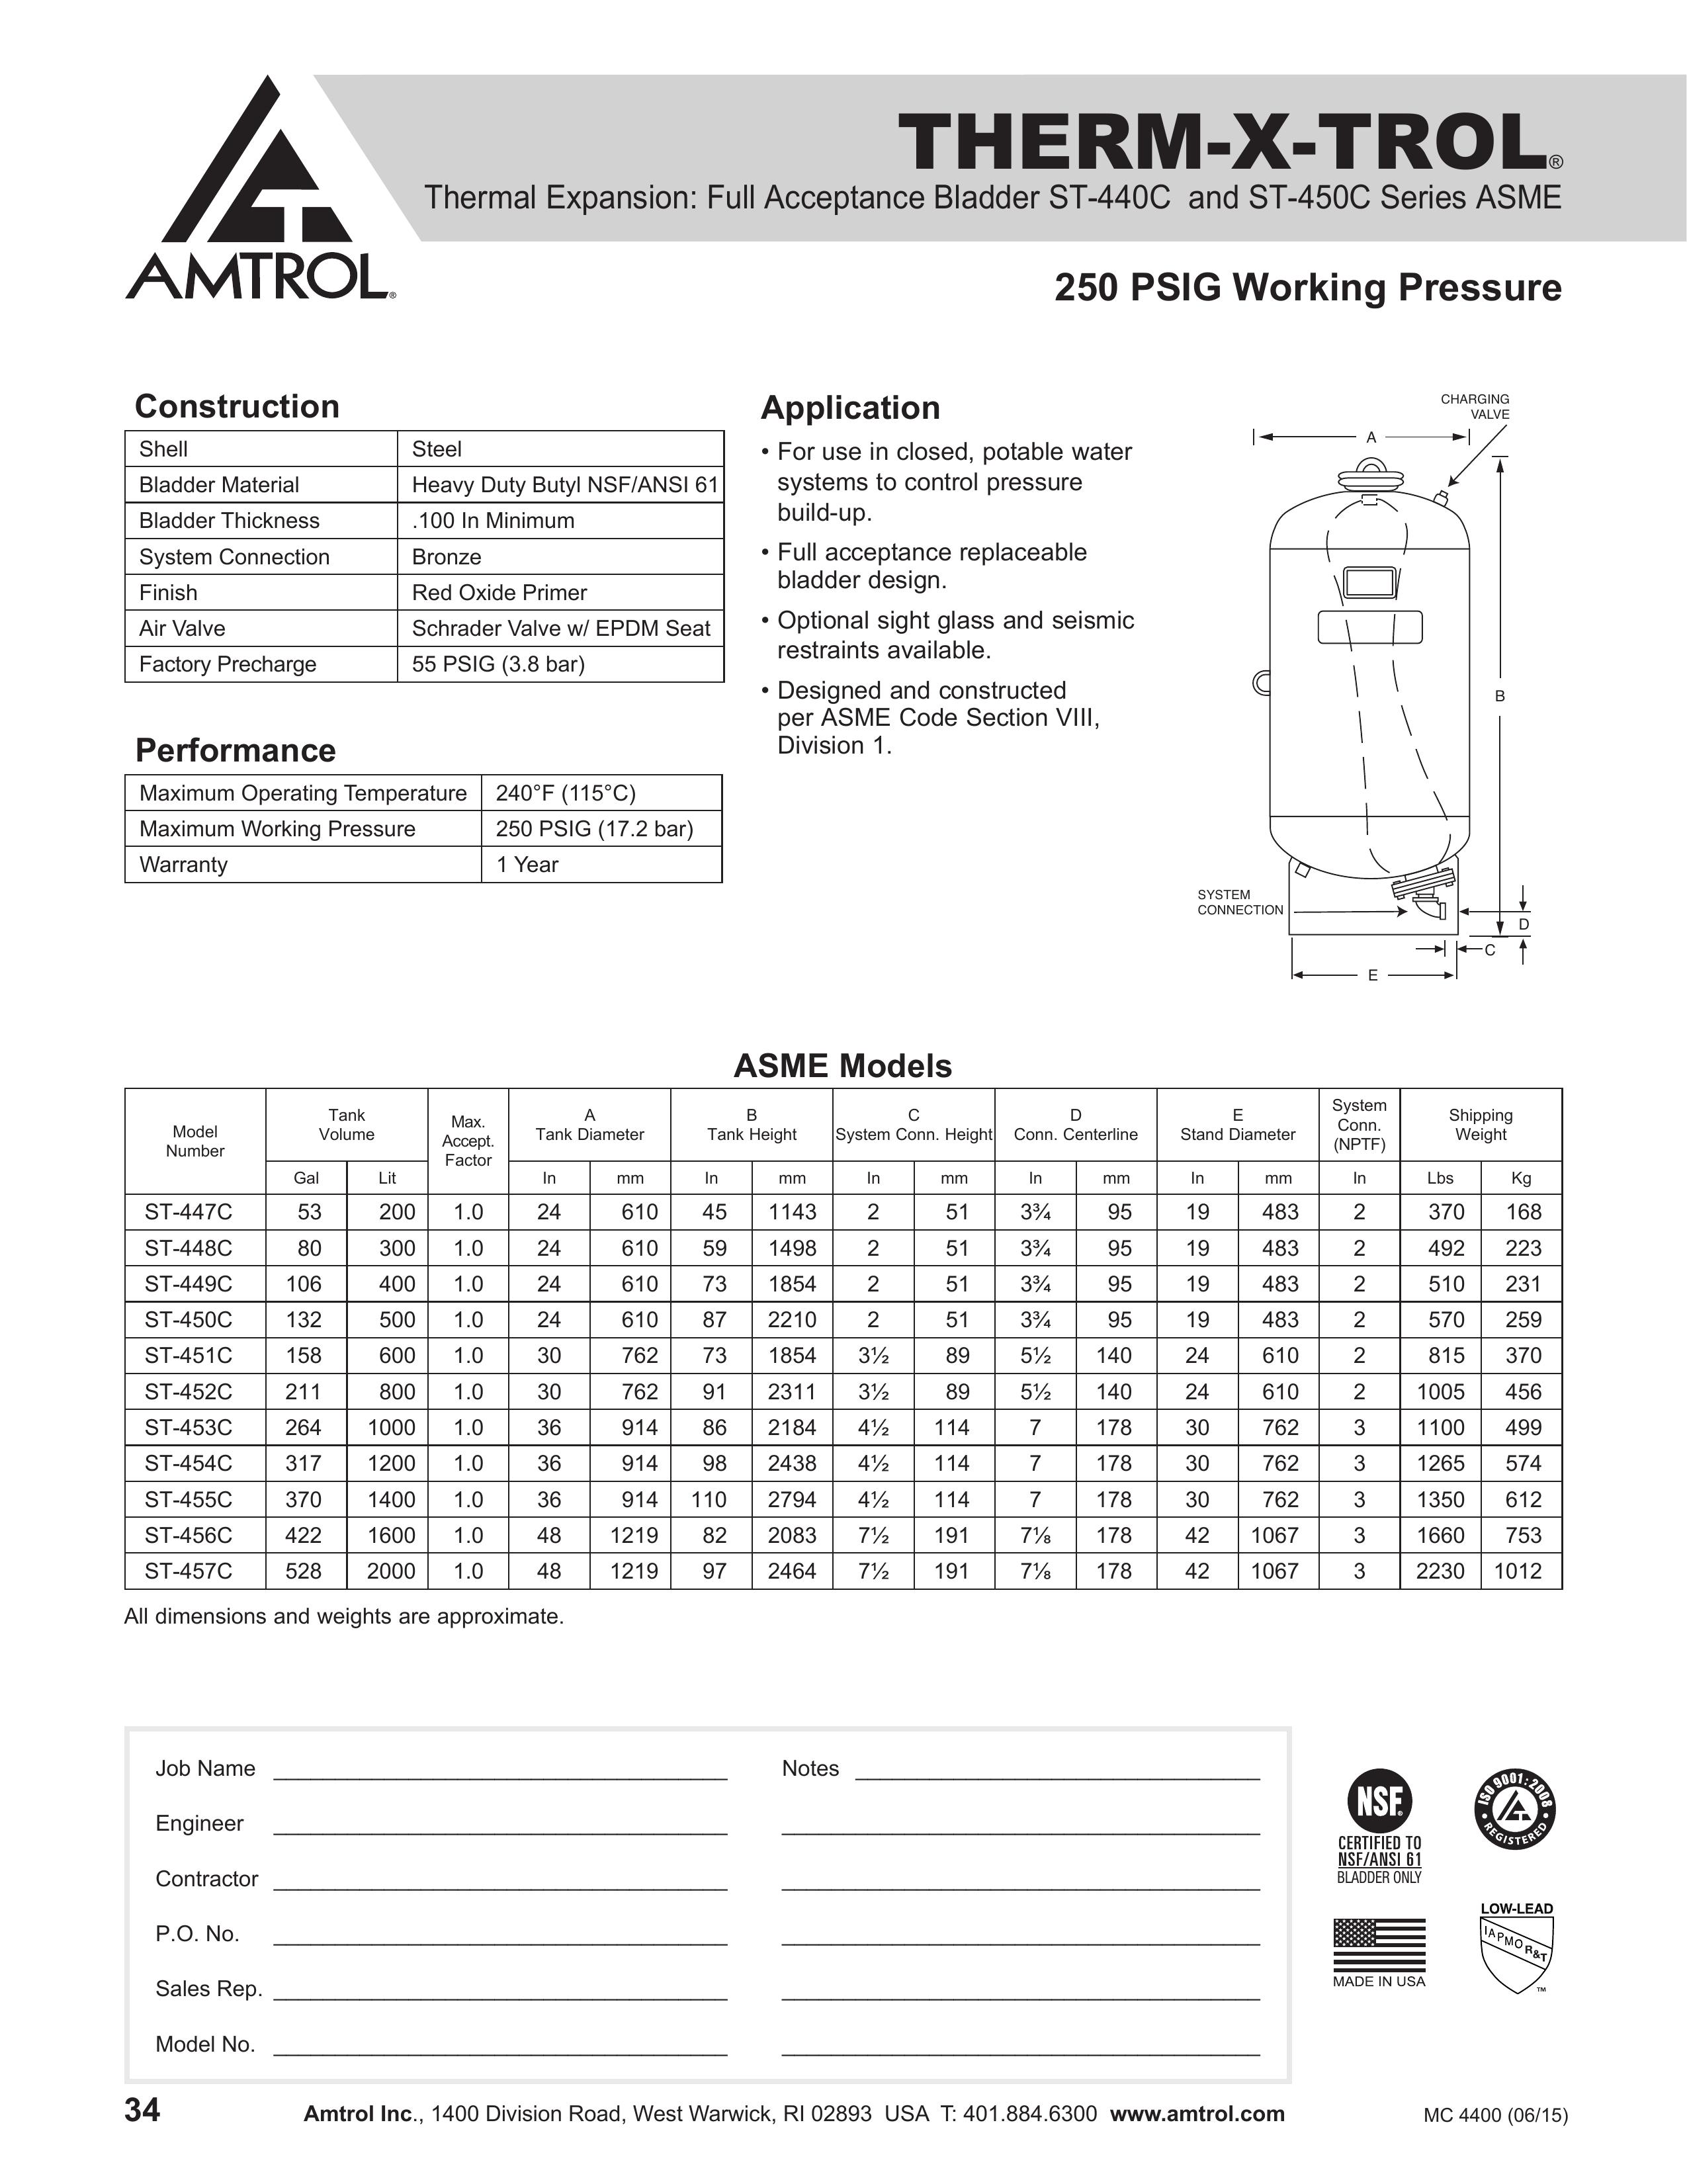 Amtrol ST-449C Slow Cooker User Manual